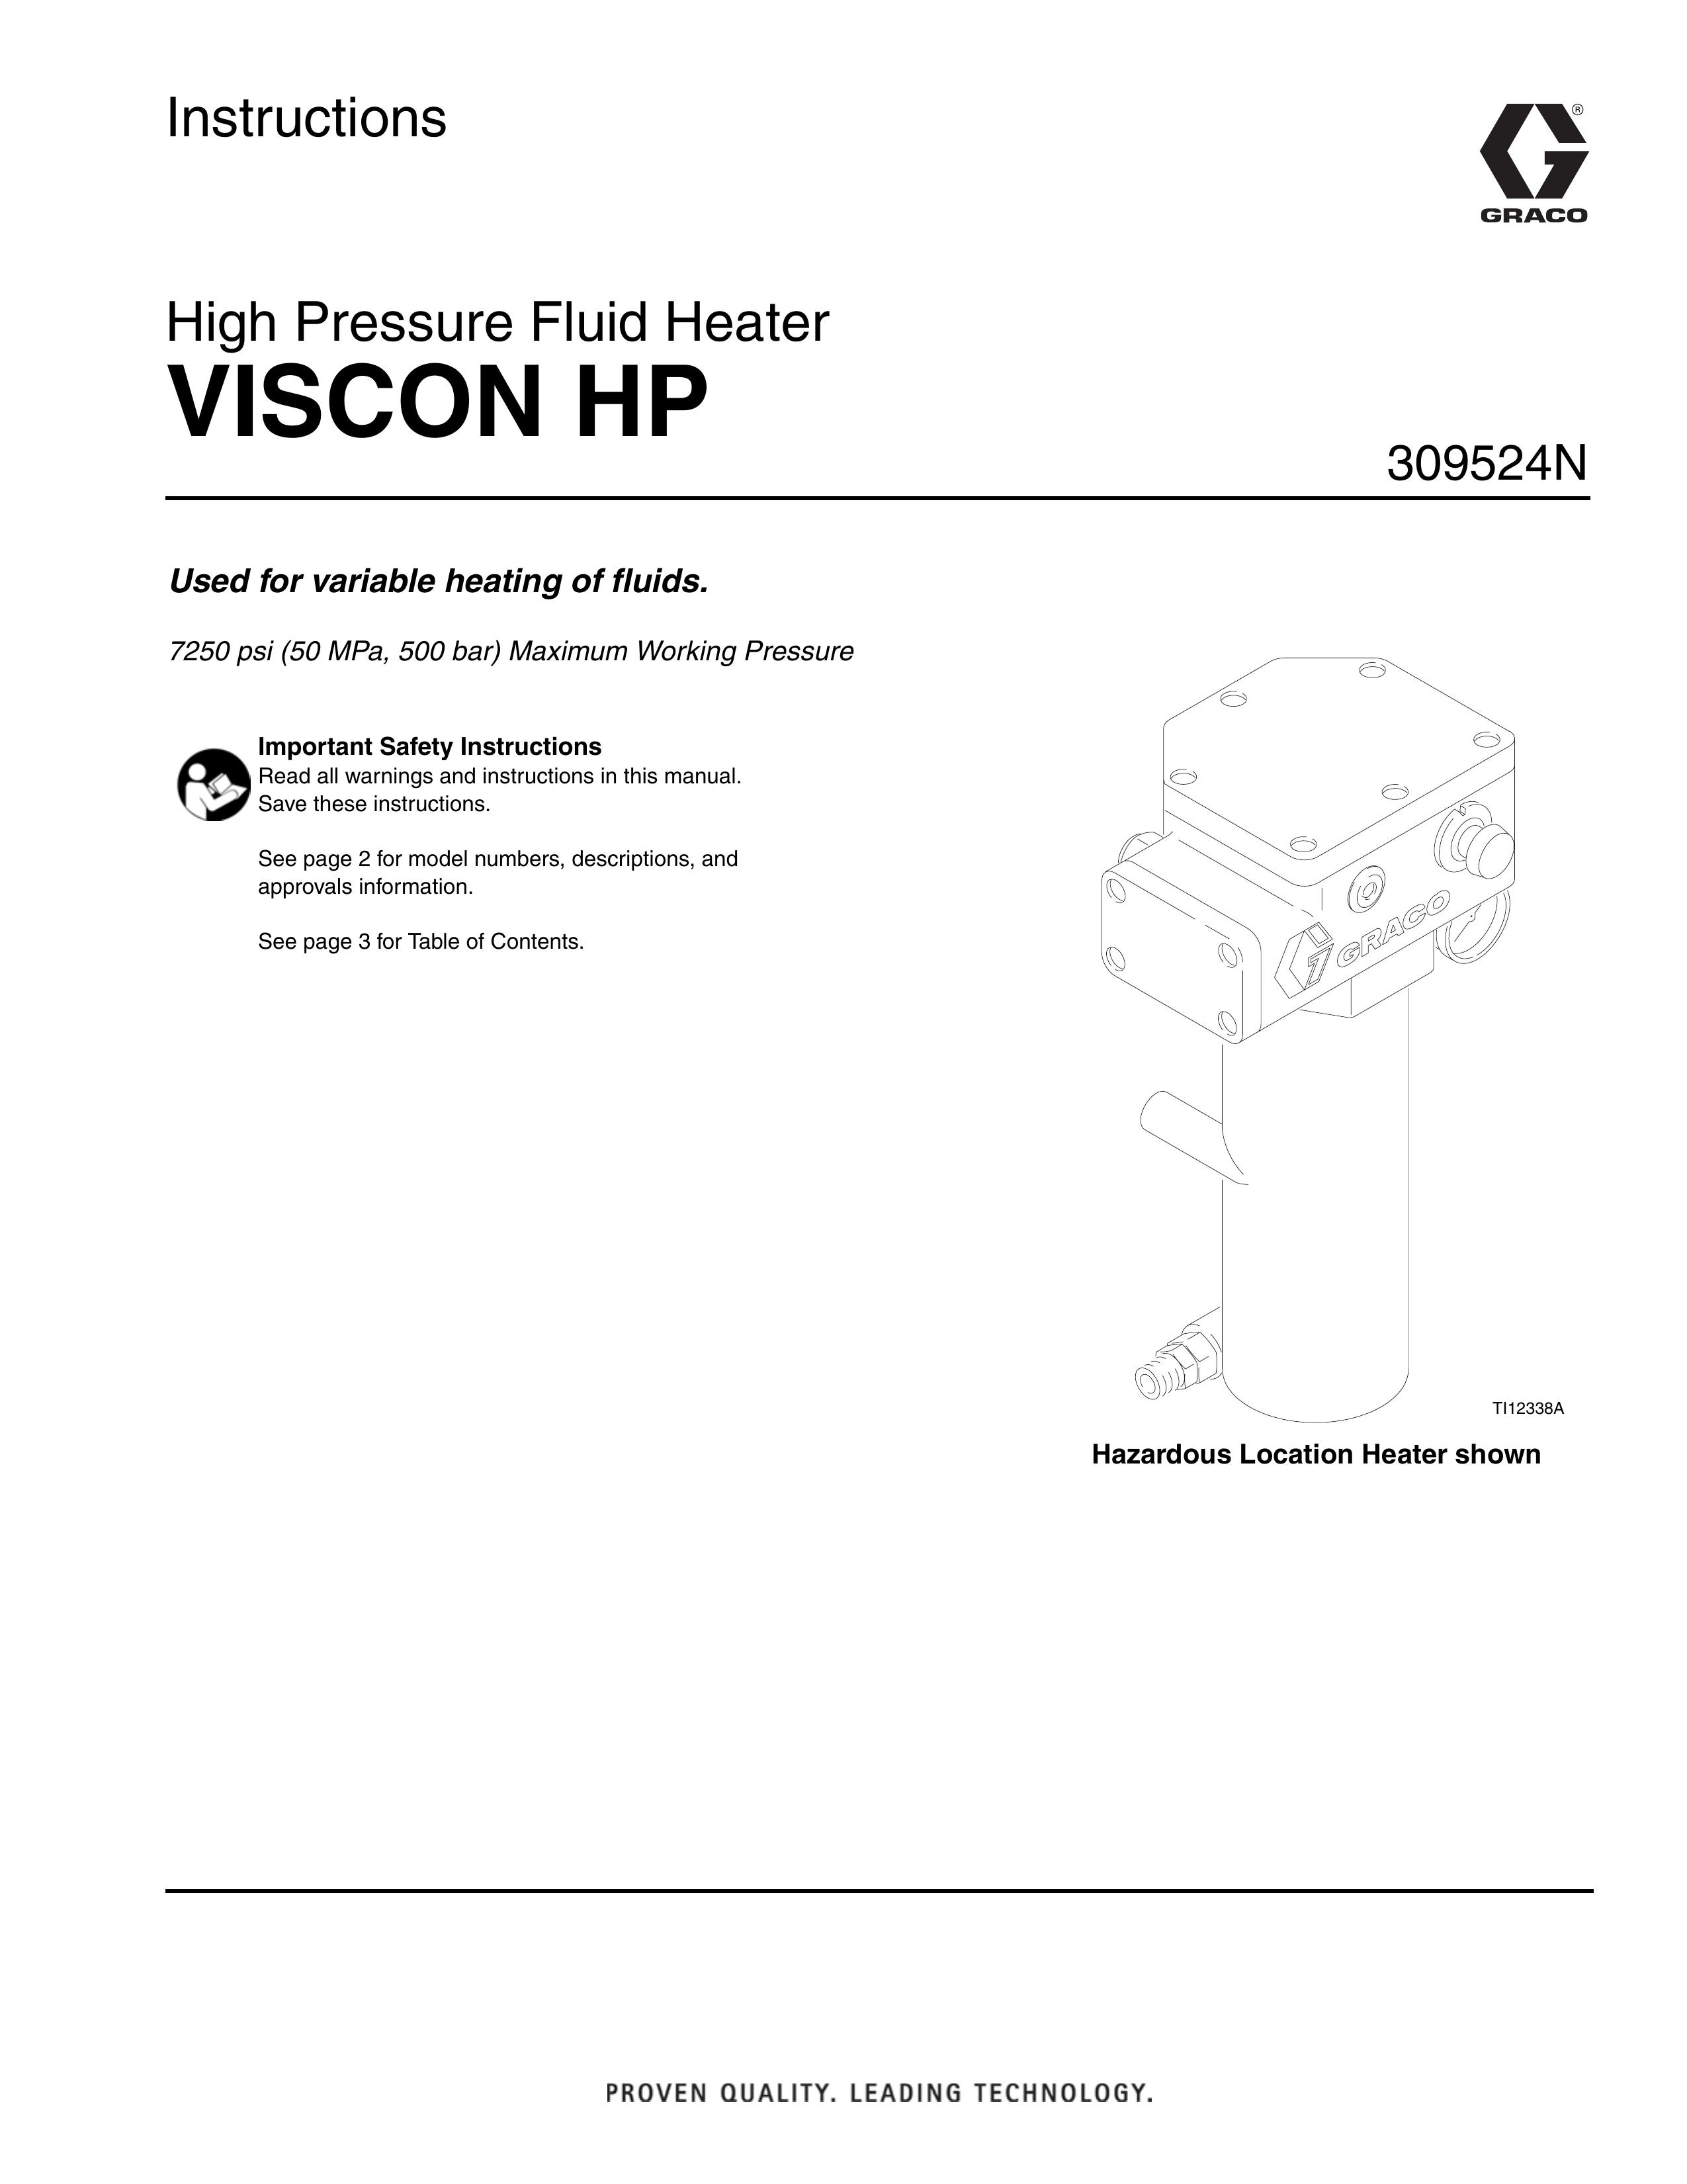 Graco 309524N Marine Heating System User Manual